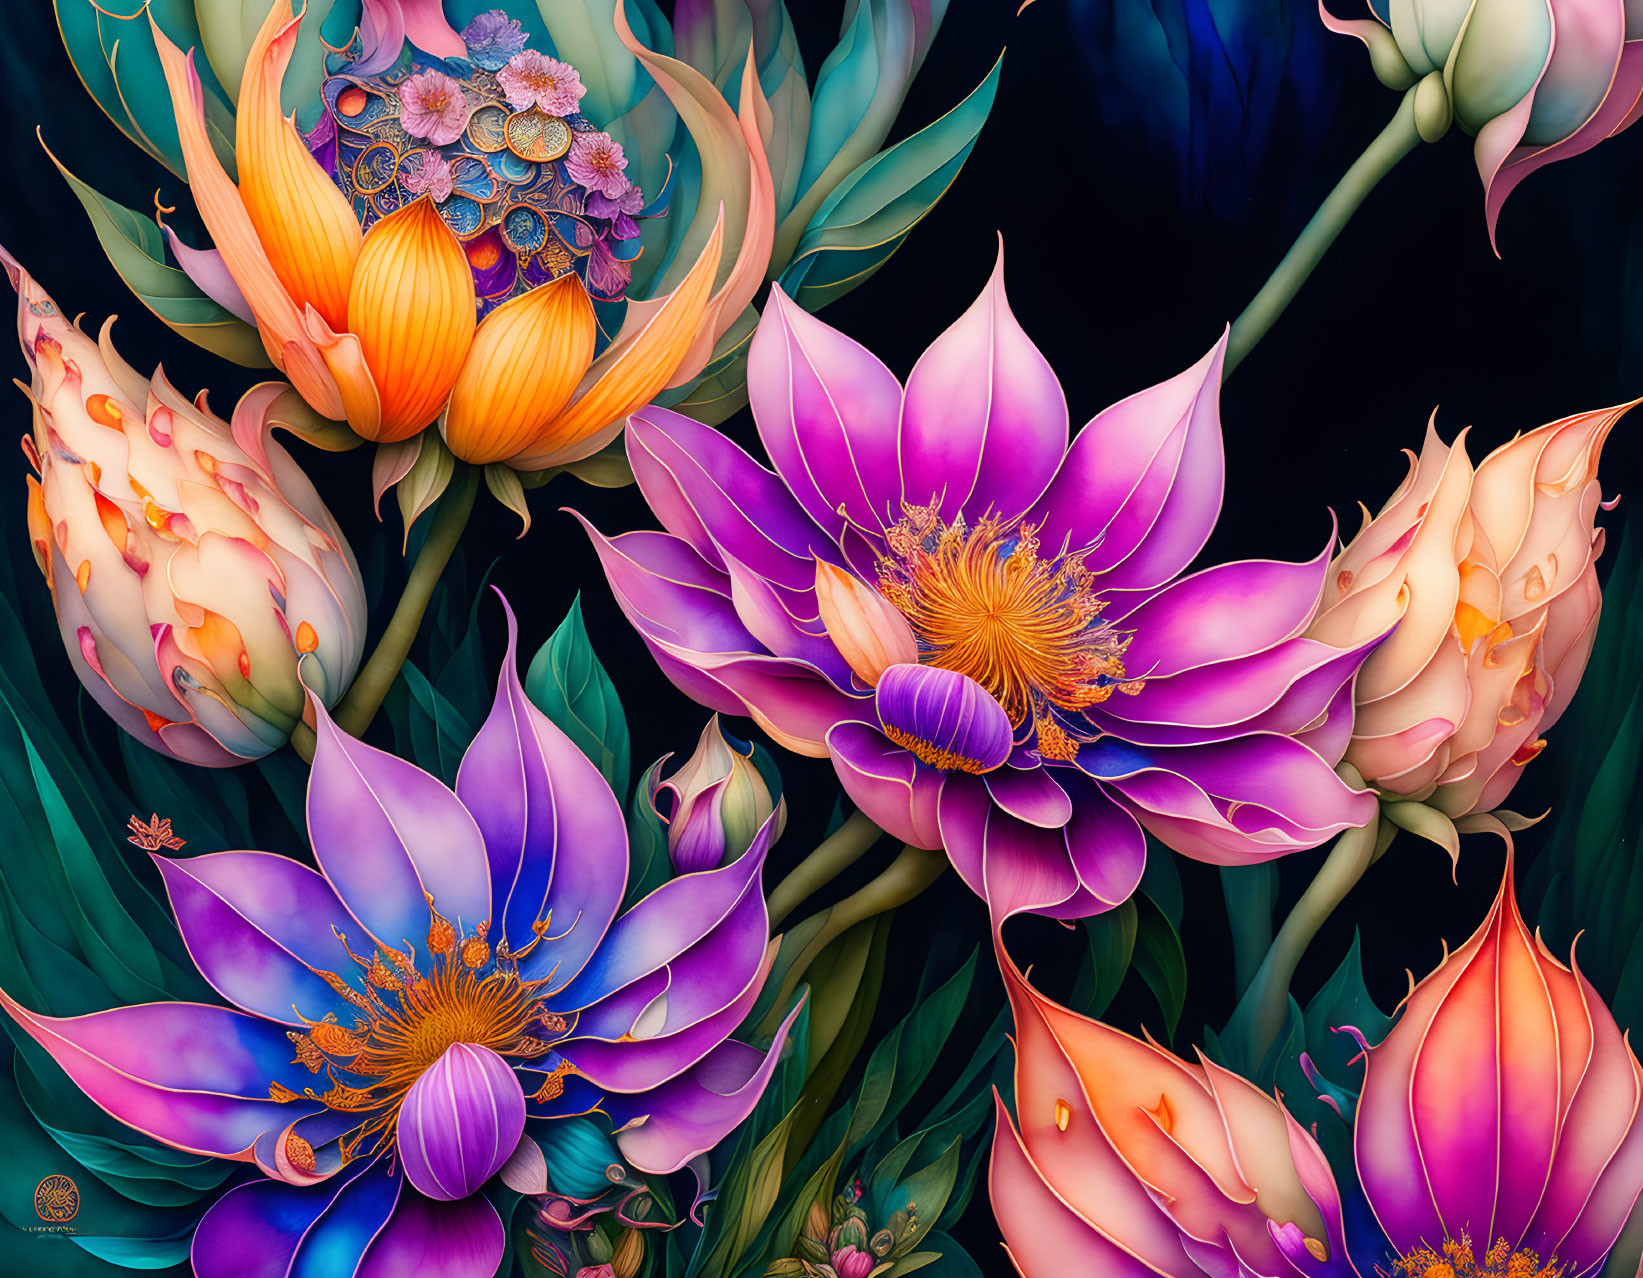 Colorful Stylized Flowers Illustration on Dark Background